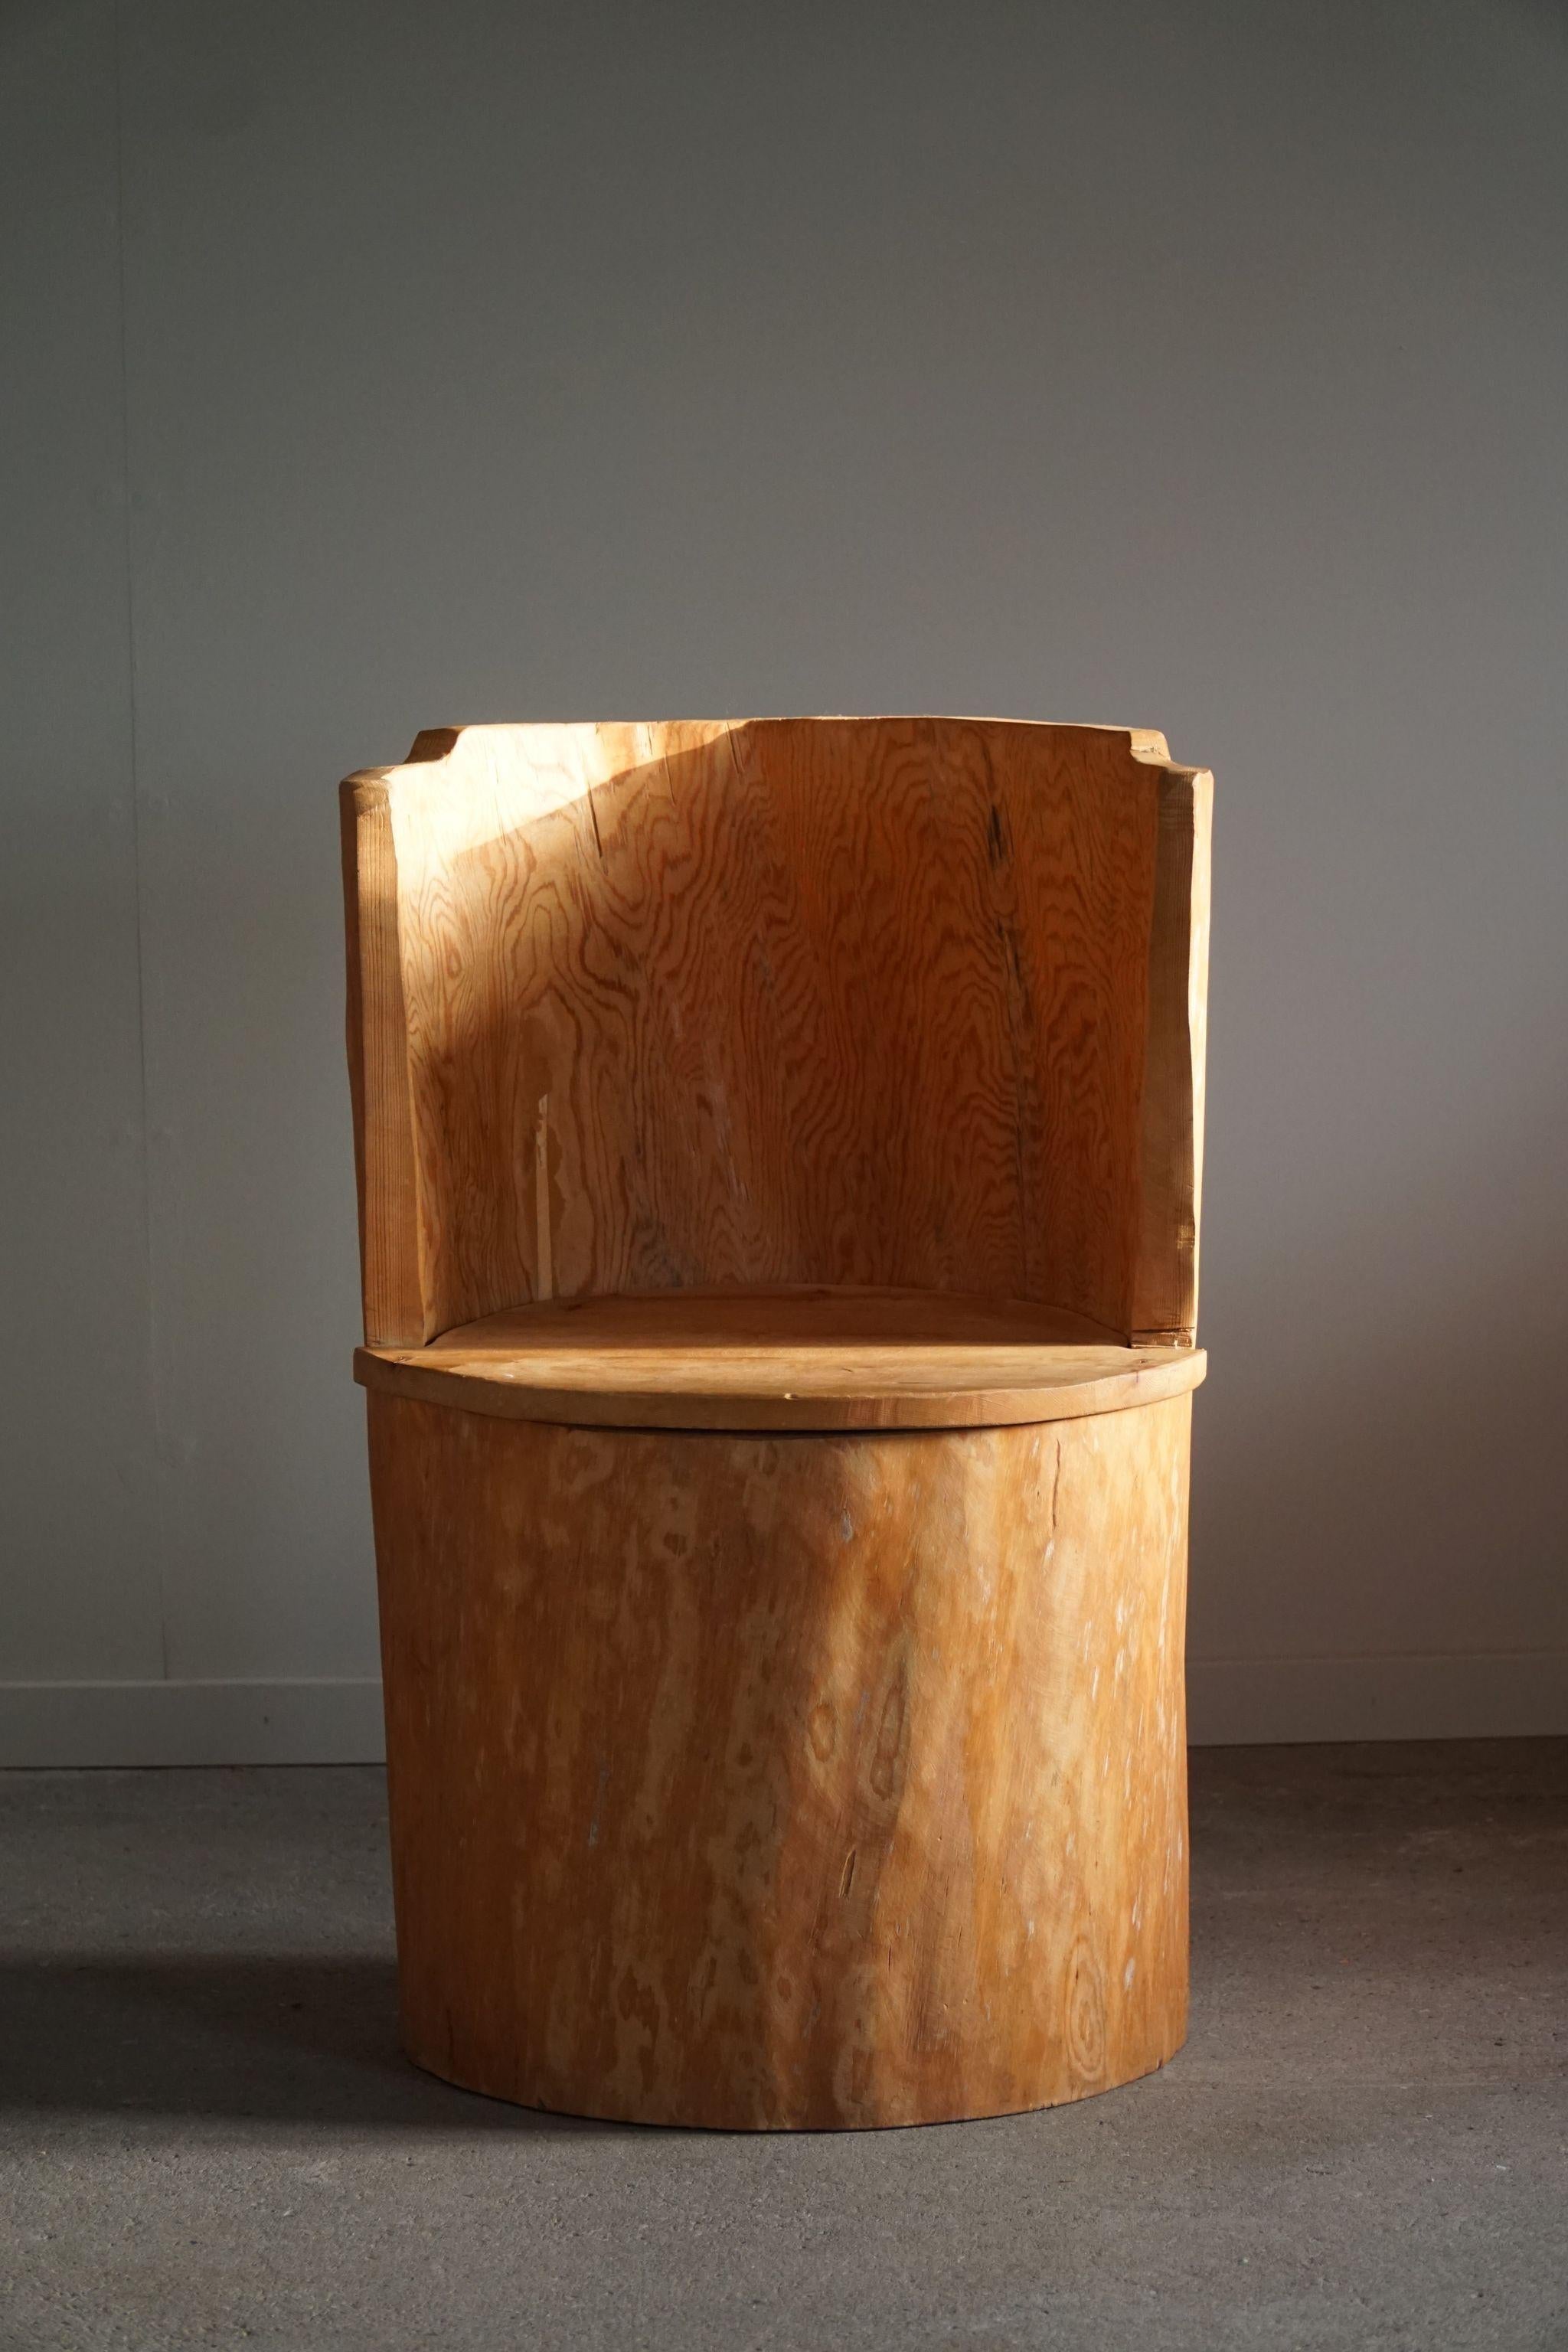 20th Century Wabi Sabi Stump Chair in Solid Pine, by a Swedish Cabinetmaker, Modern - 1960s